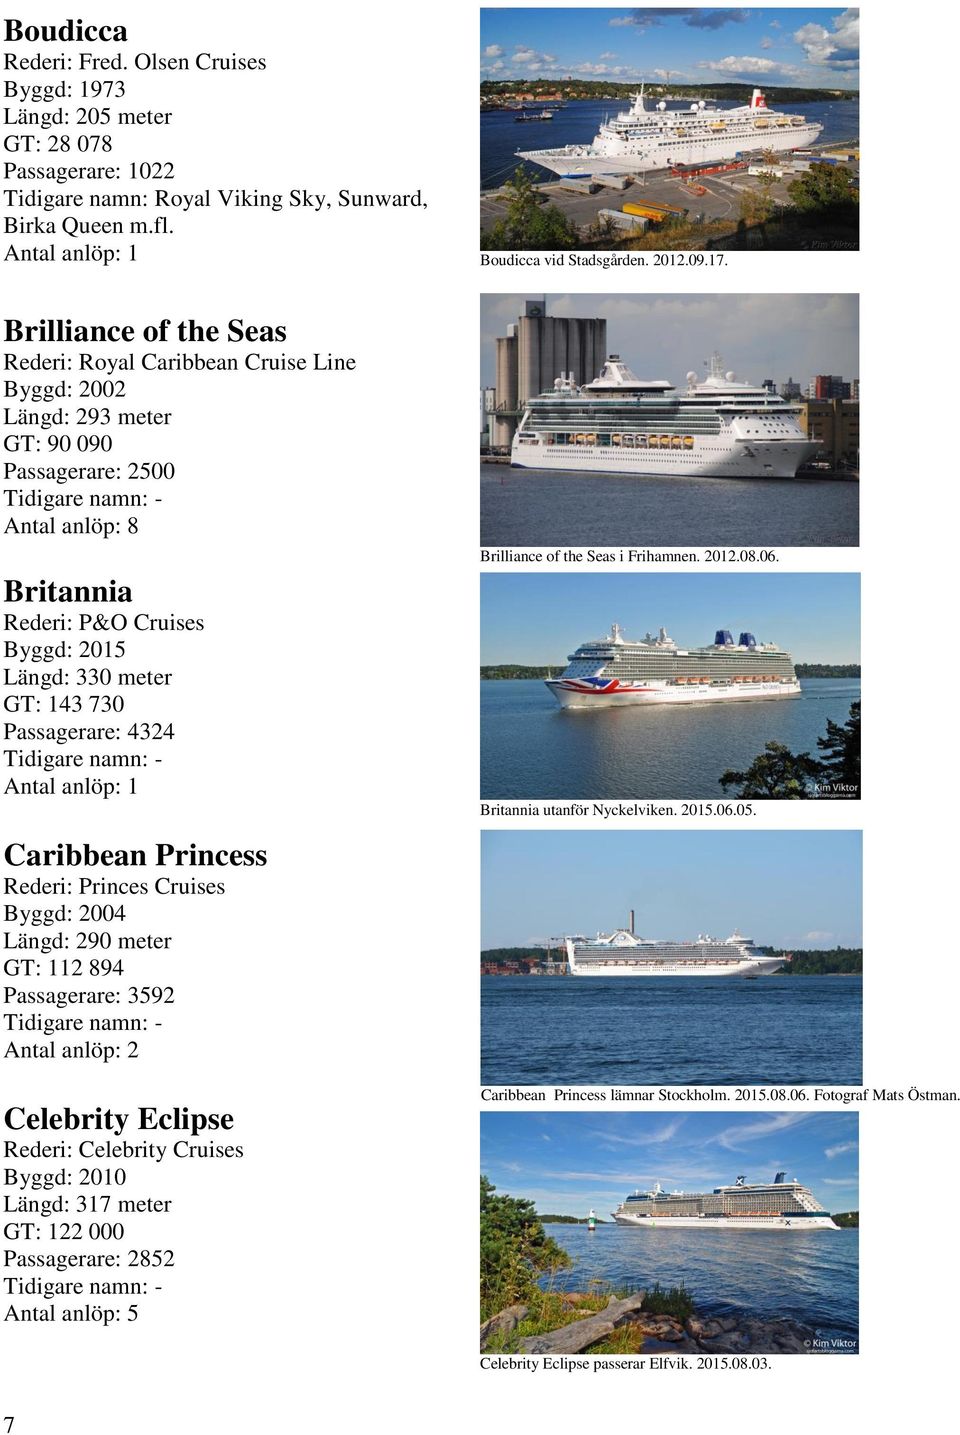 730 Passagerare: 4324 Caribbean Princess Rederi: Princes Cruises Byggd: 2004 Längd: 290 meter GT: 112 894 Passagerare: 3592 Celebrity Eclipse Rederi: Celebrity Cruises Byggd: 2010 Längd: 317 meter